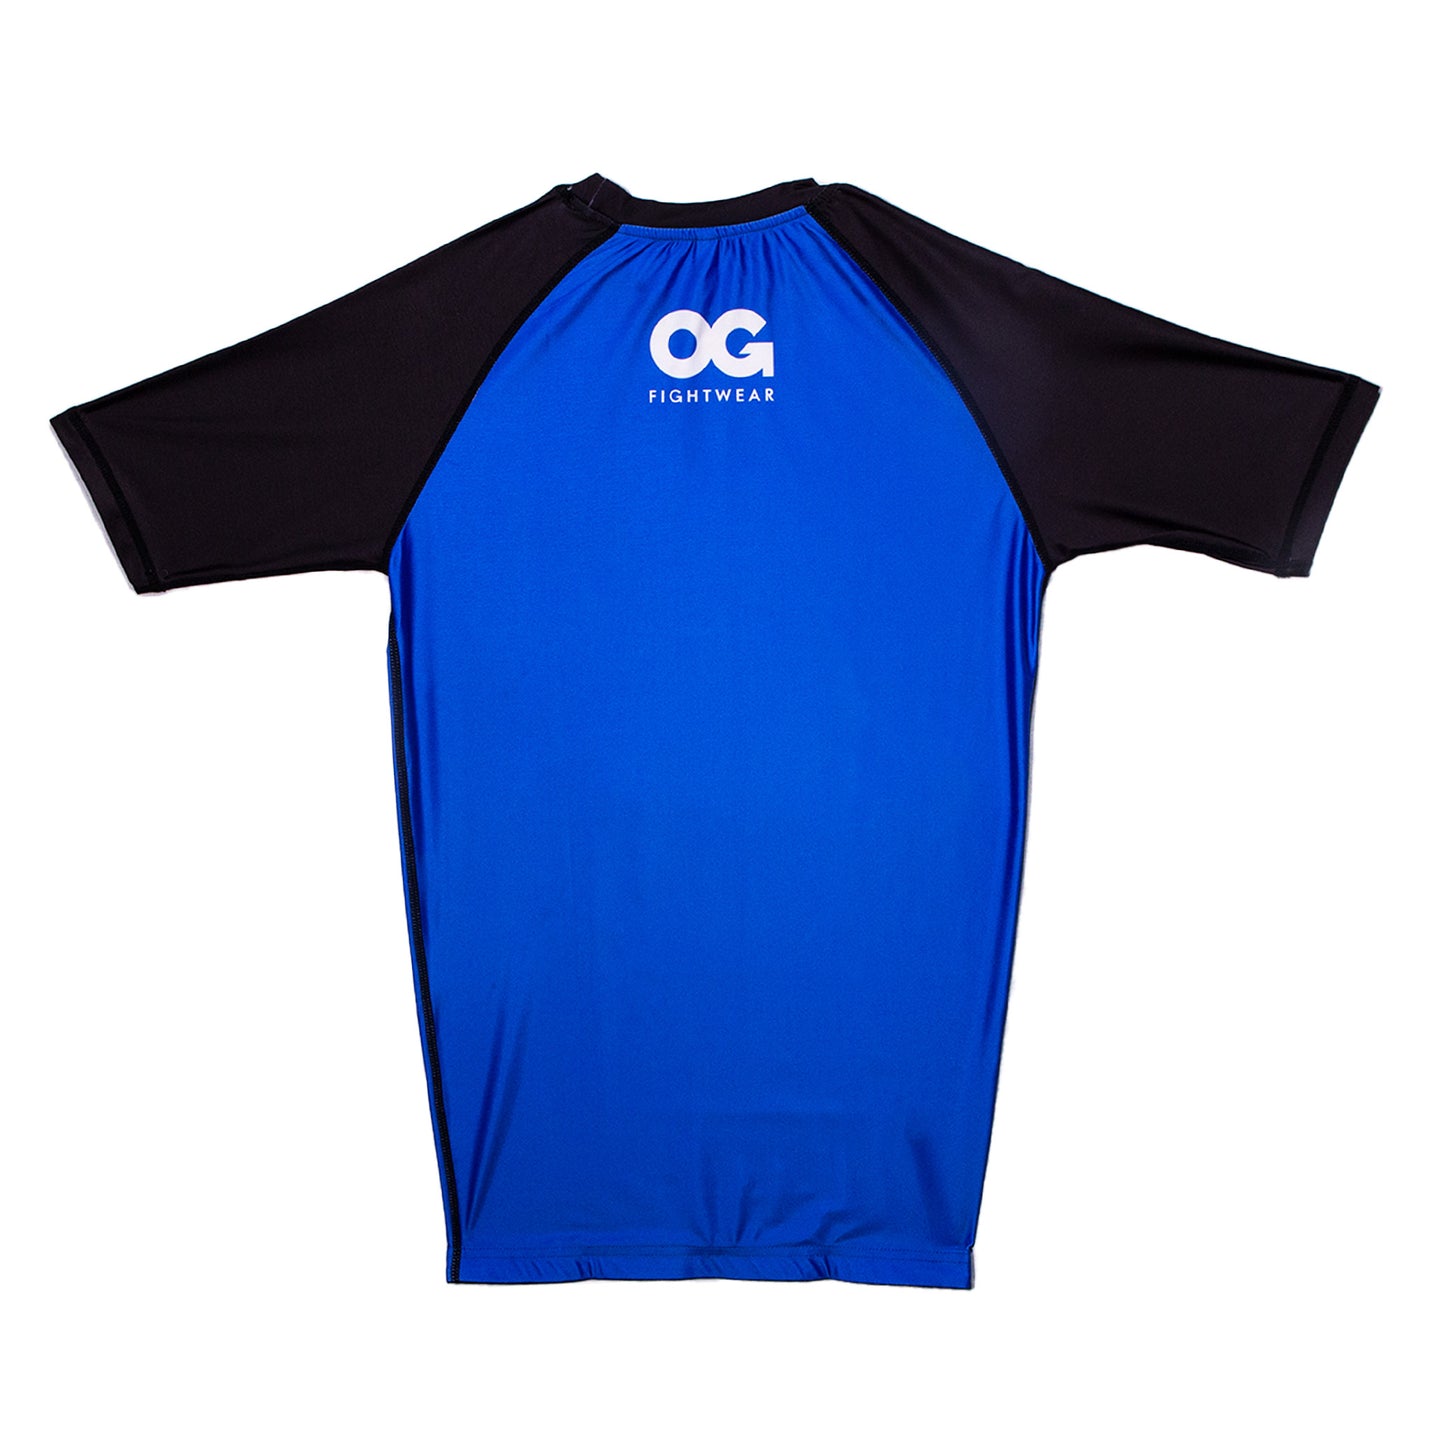 OG Short Sleeve Rashguard (Blue)